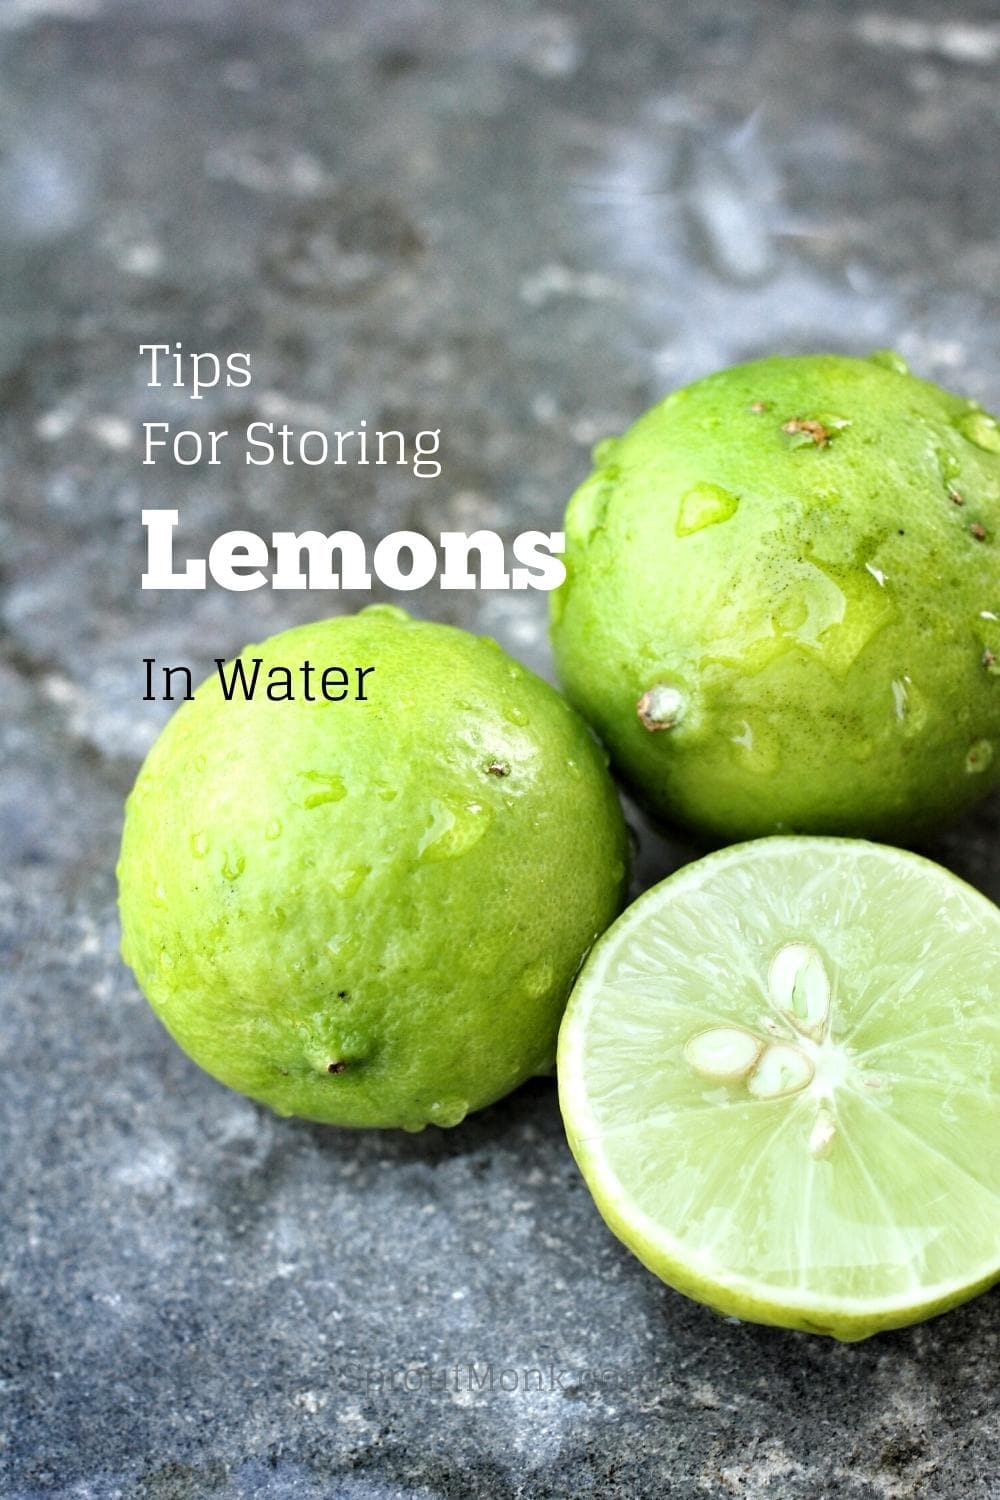 storing lemons in water guide cover image